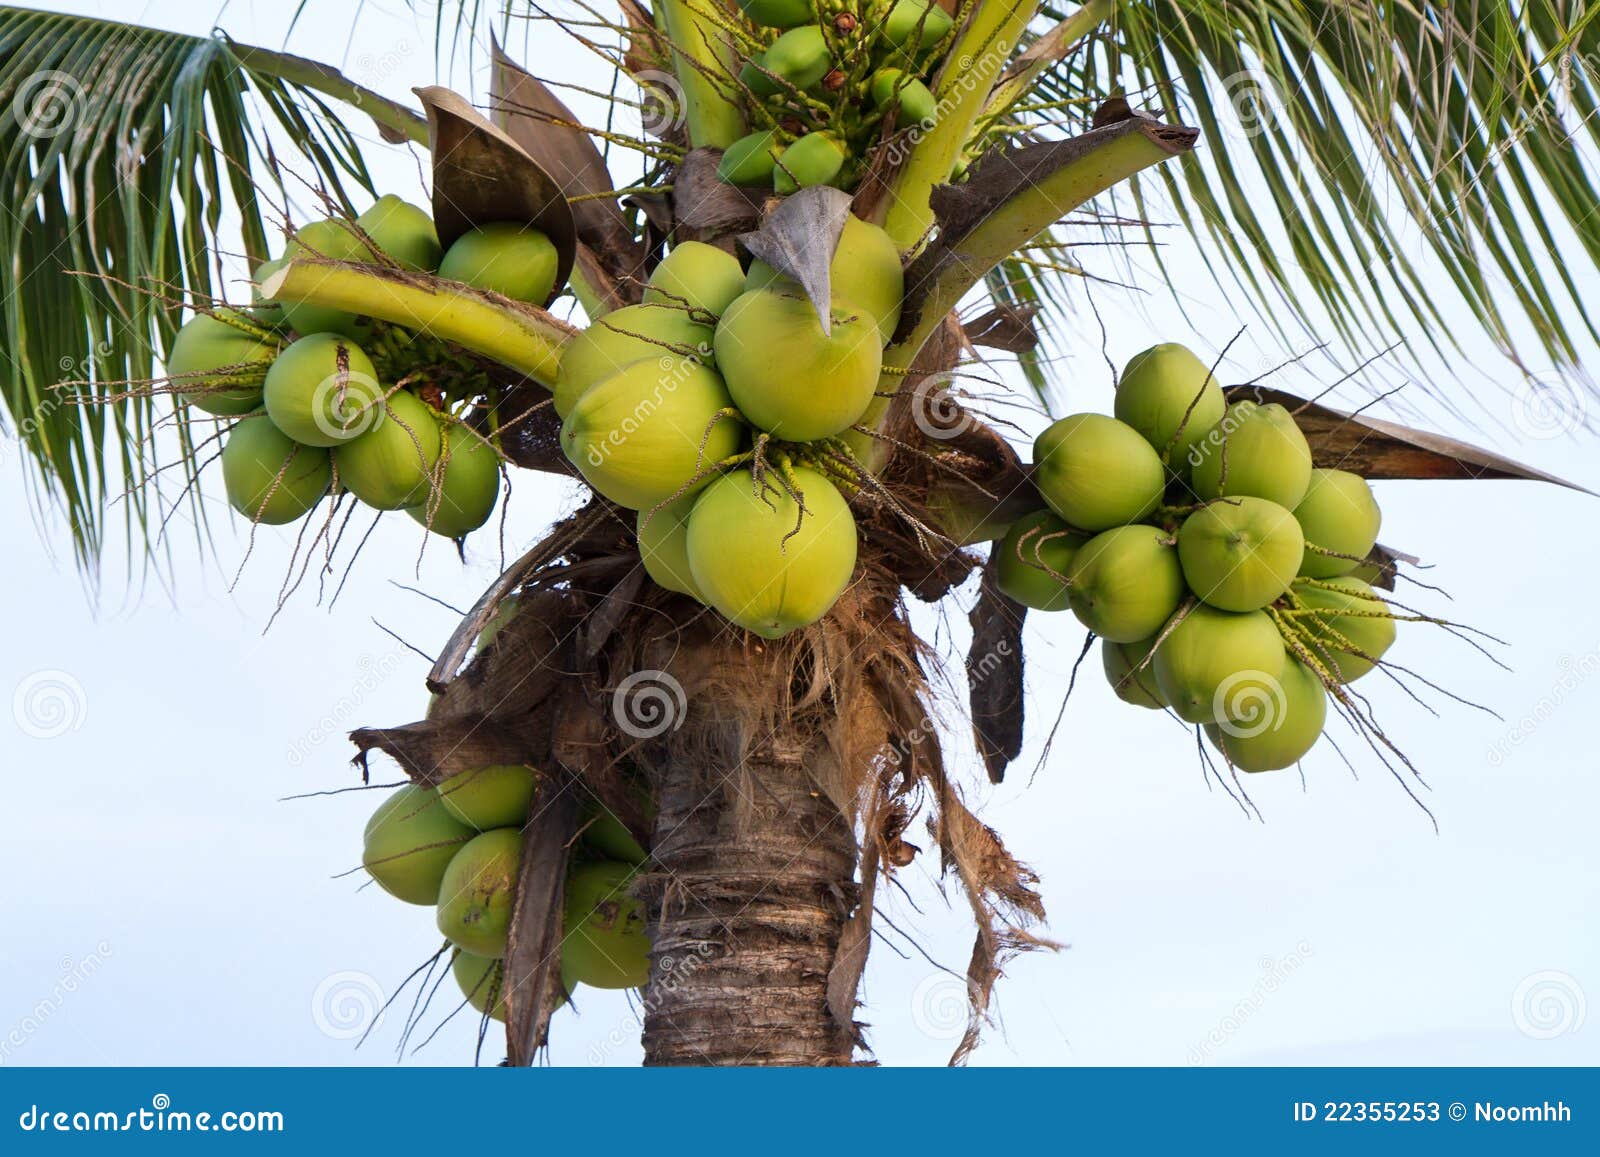 Green coconut at tree stock image. Image of natural, green - 22355253